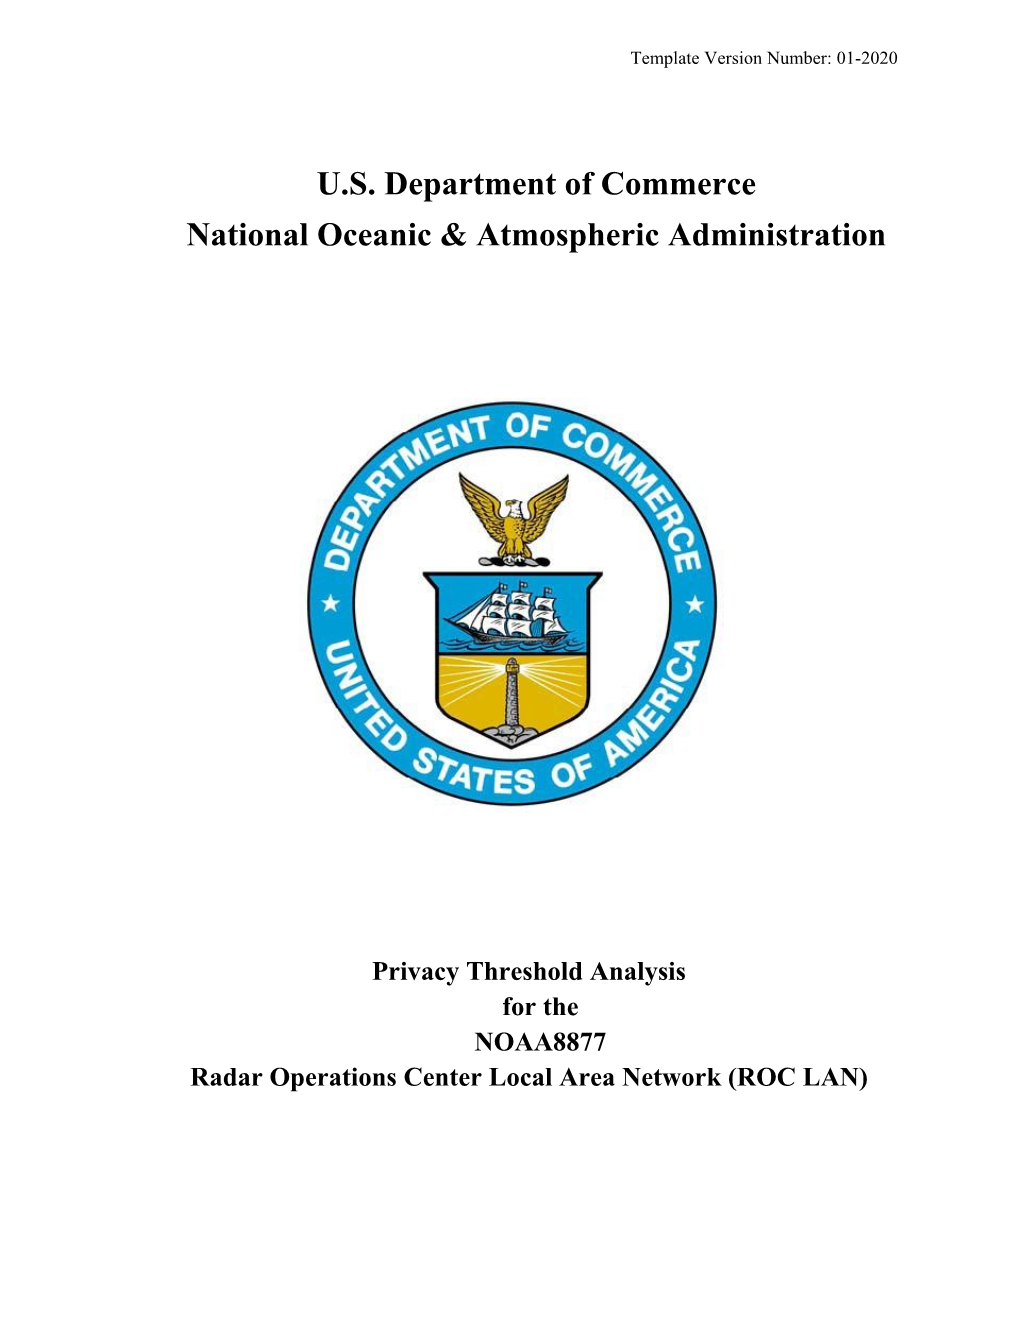 U.S. Department of Commerce National Oceanic & Atmospheric